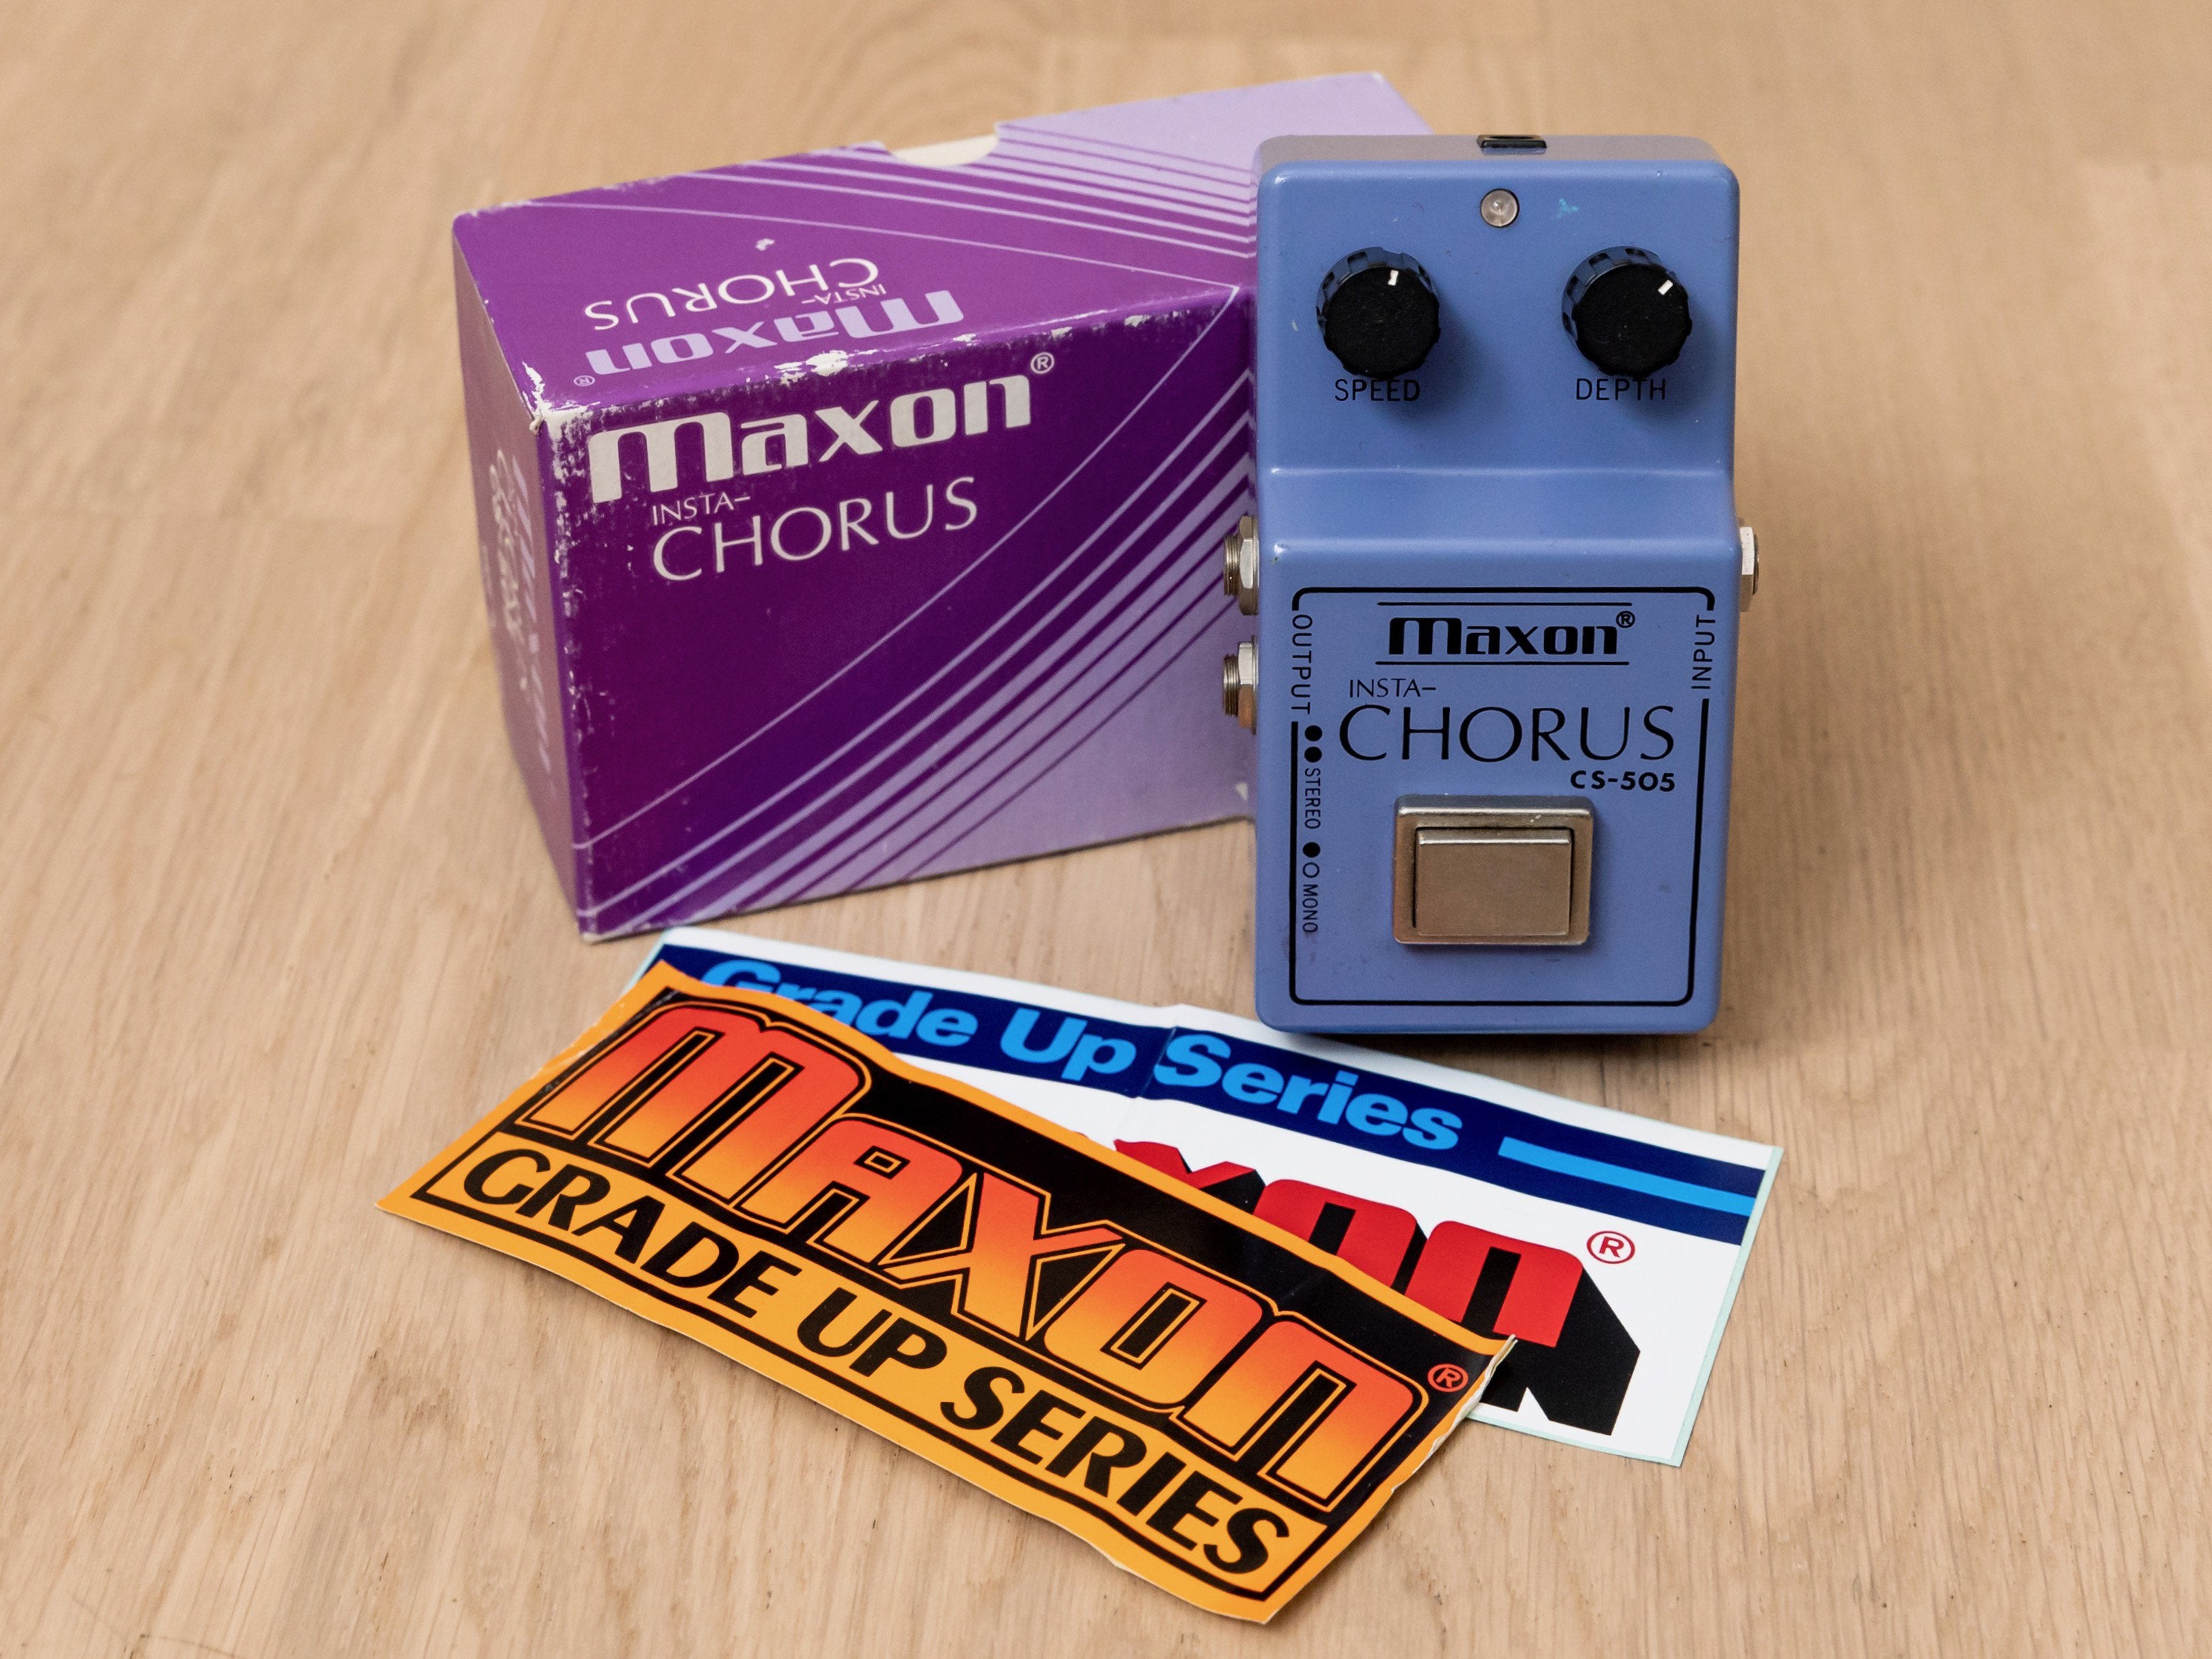 1980s Maxon CS-505 Insta-Chorus Vintage Analog Guitar Effects Pedal, Near Mint w/ Box, Ibanez